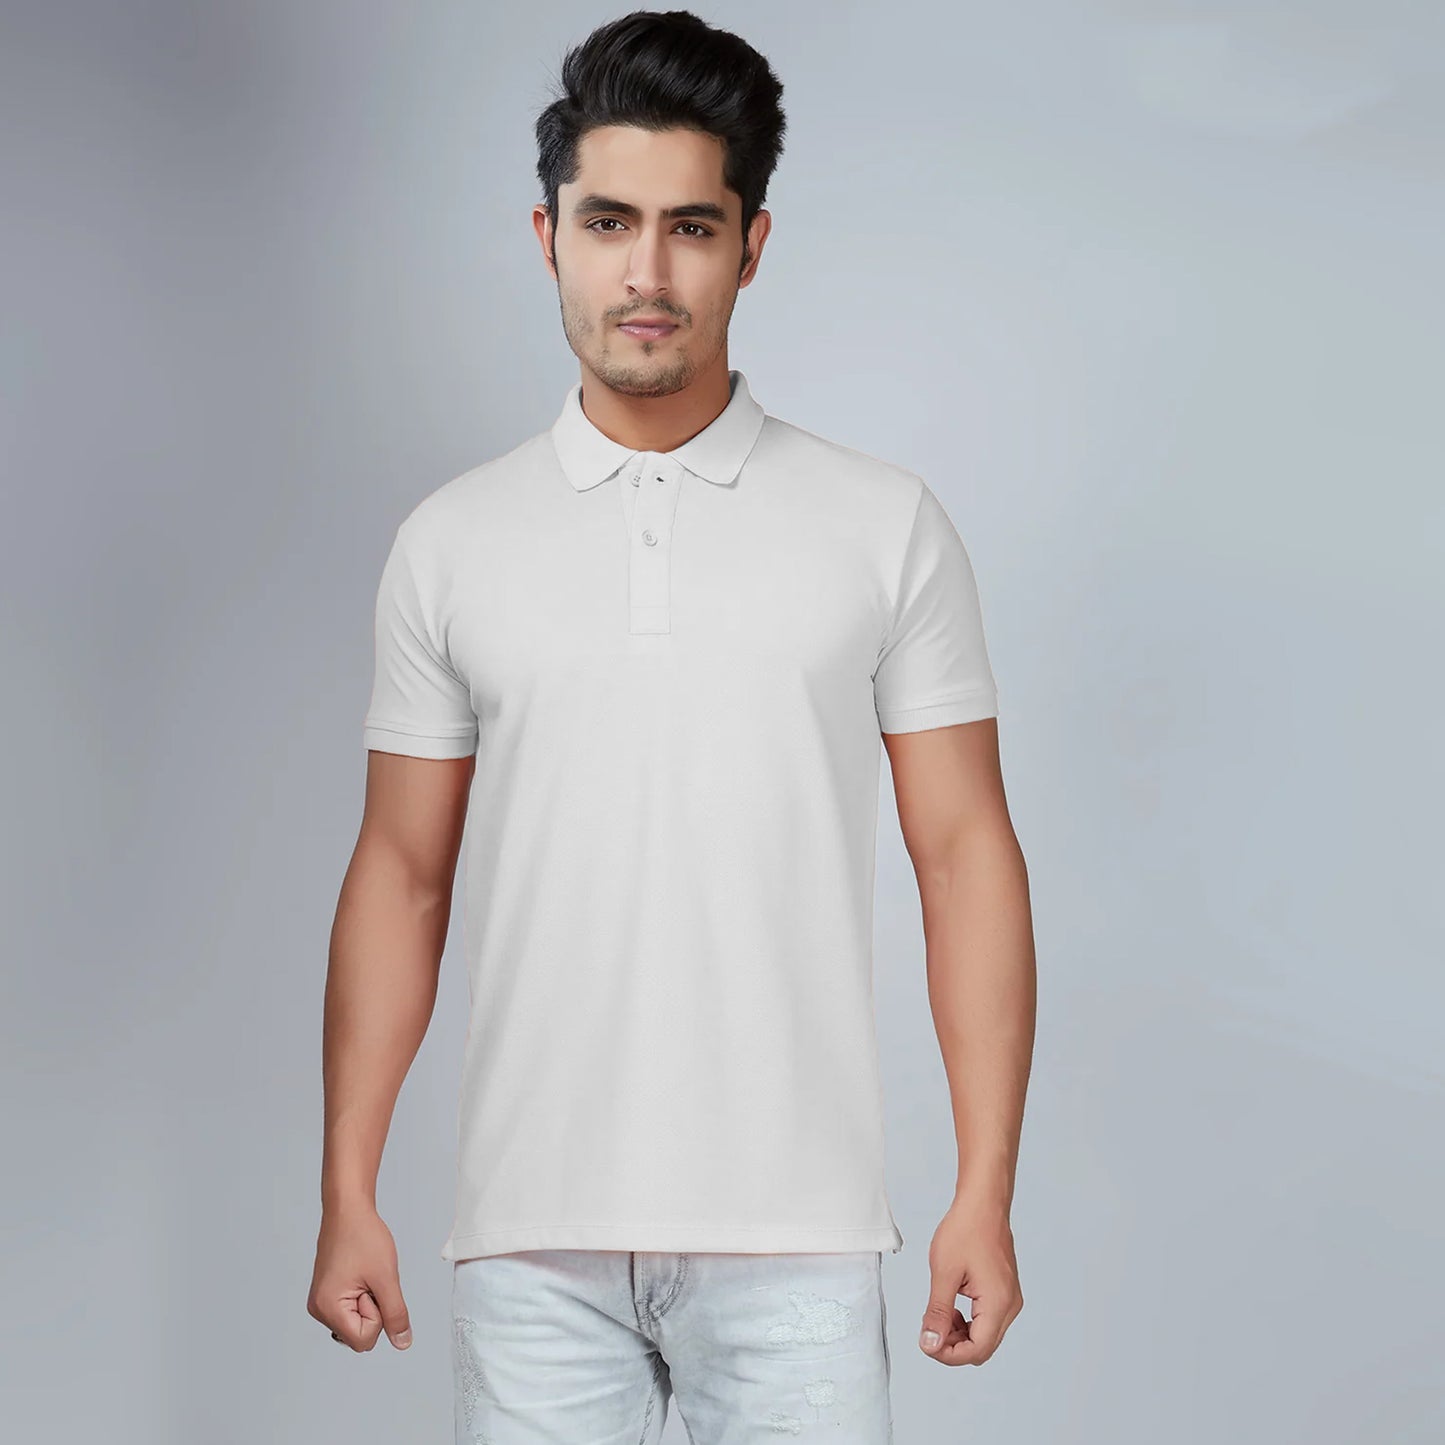 Men's White Polo T-Shirt